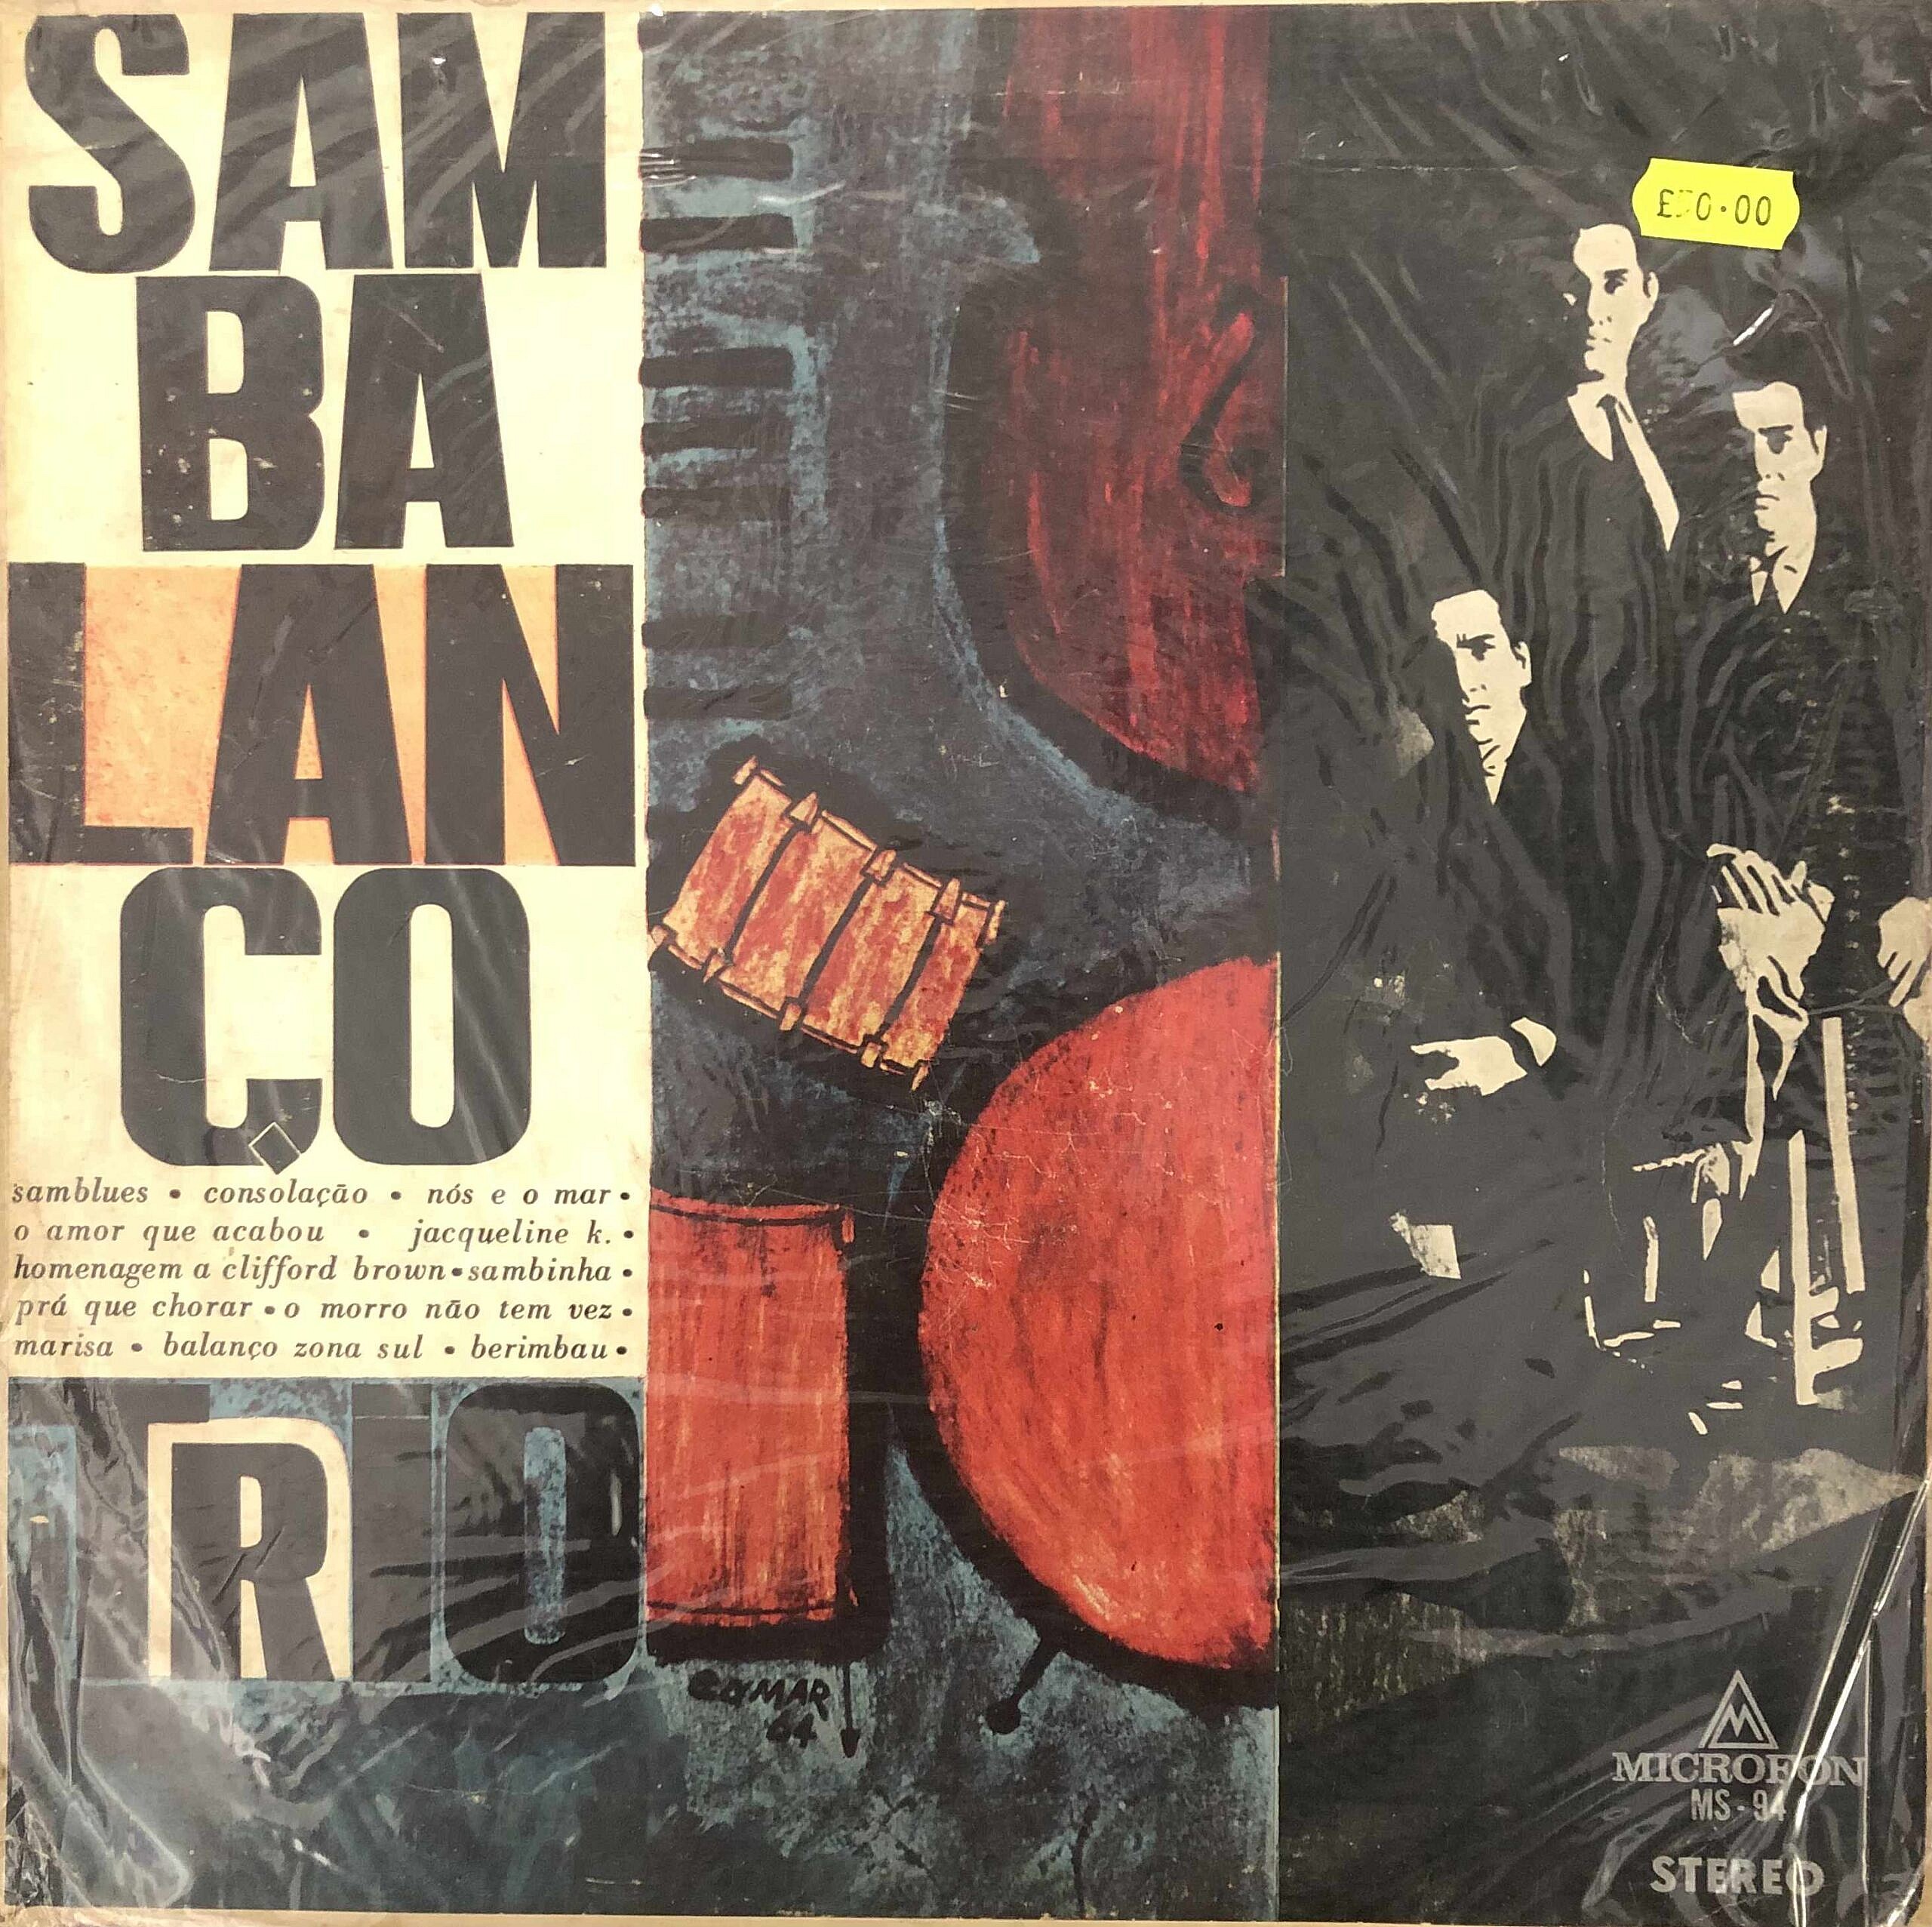 Sambalanco Trio